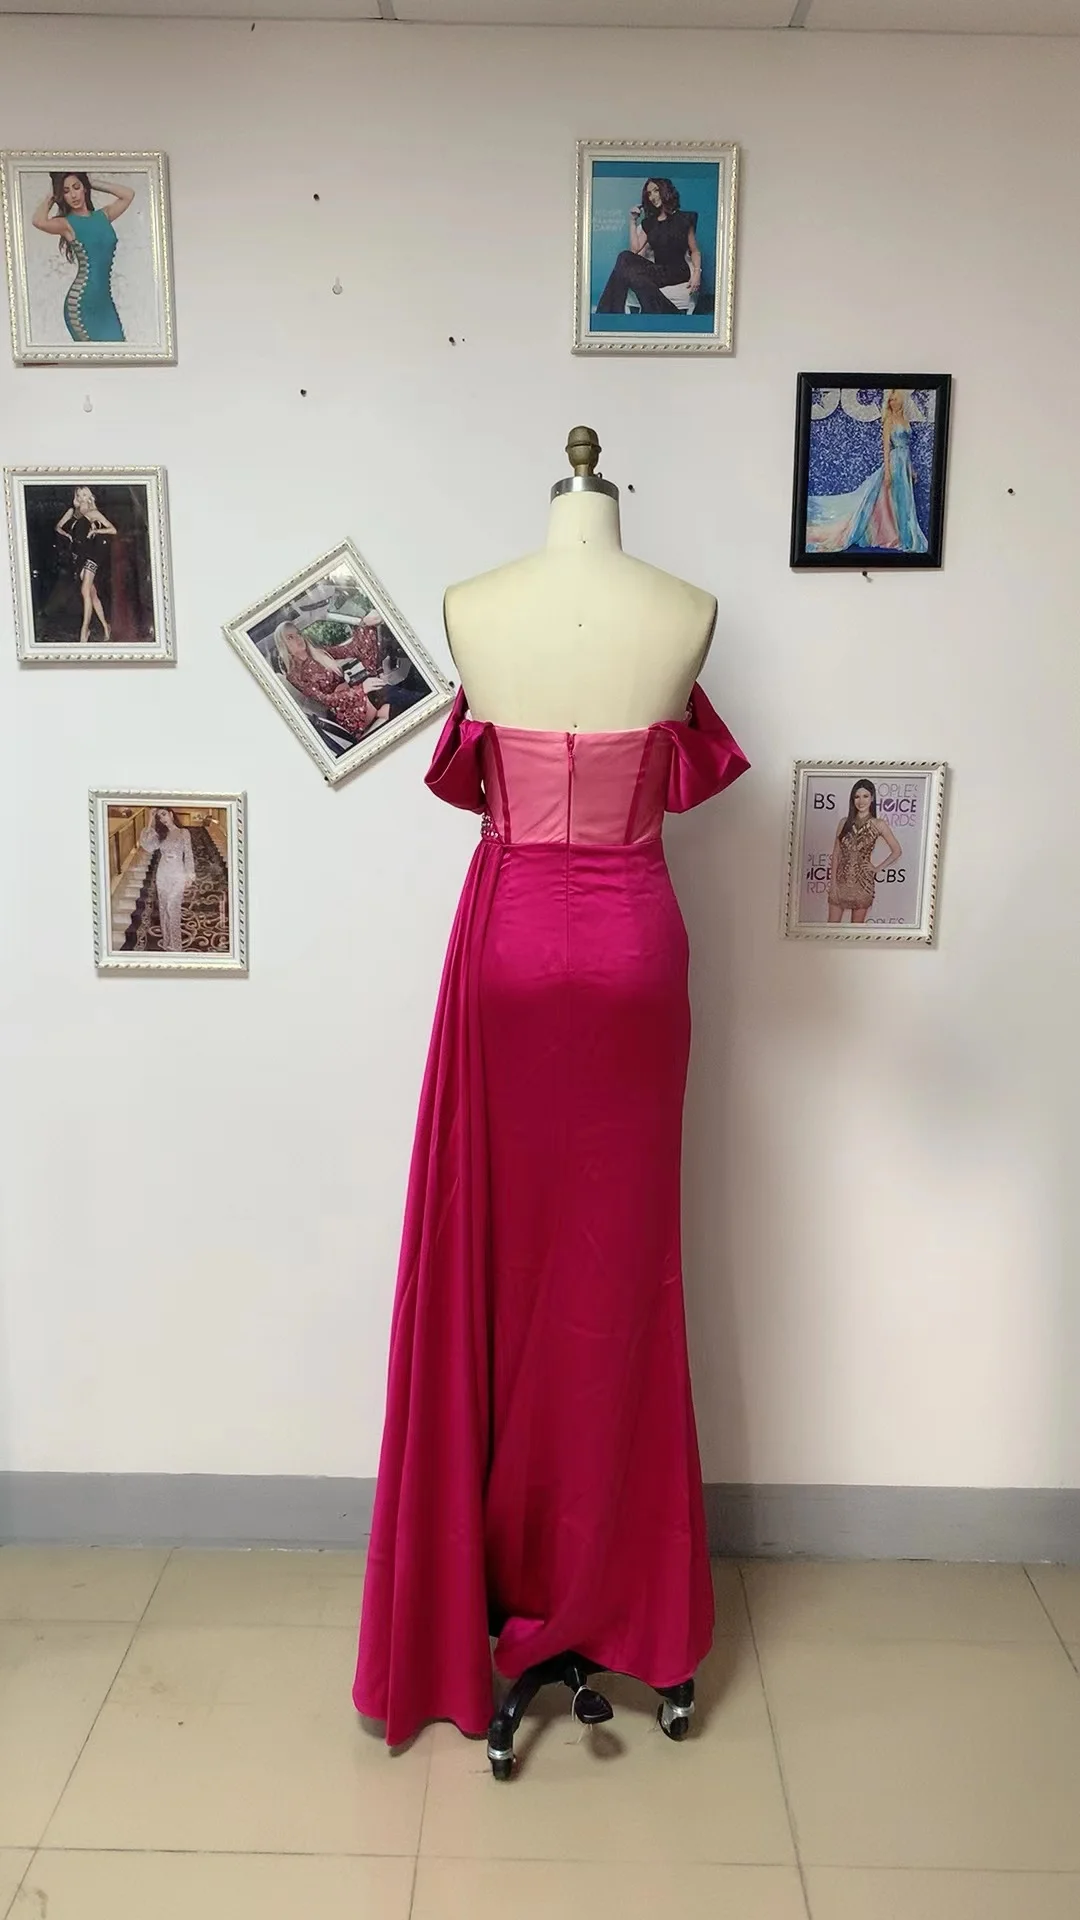 Hot Pink Fashion Silk Luxury Off Shoulder Rhinestone Corset Prom